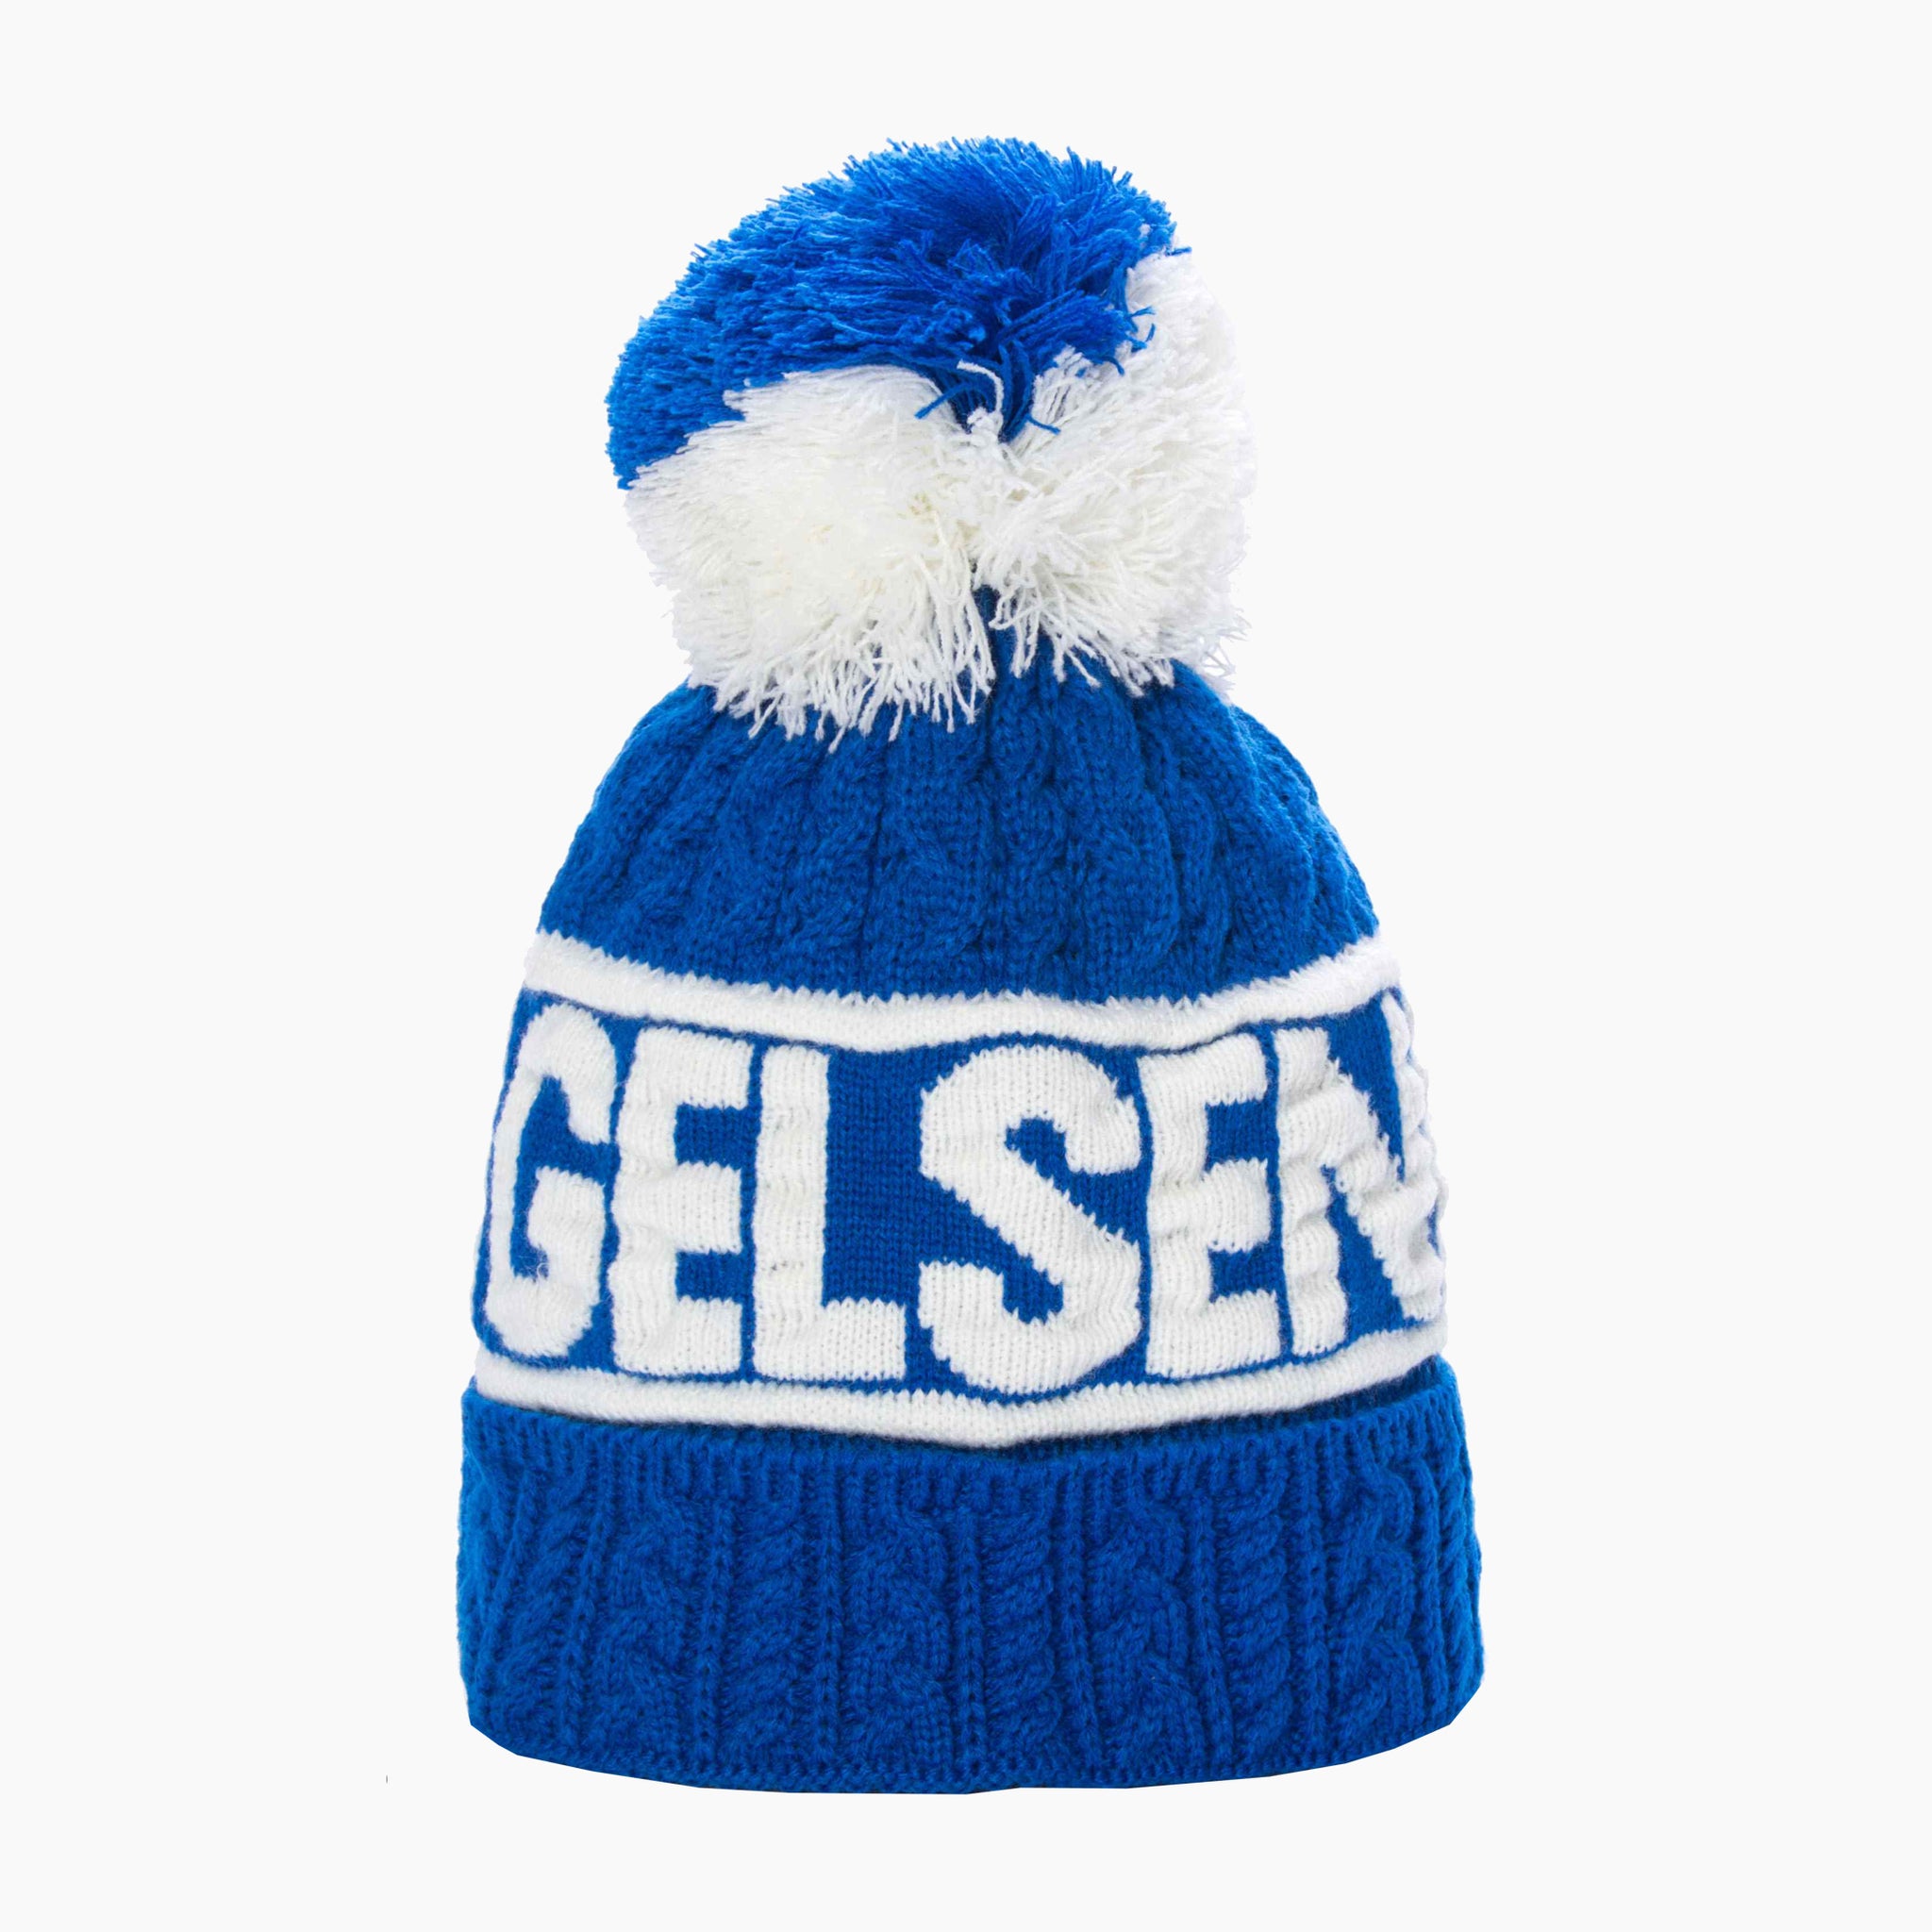 Gelsenkirchen Winter Hat with Pompon - Robin Ruth